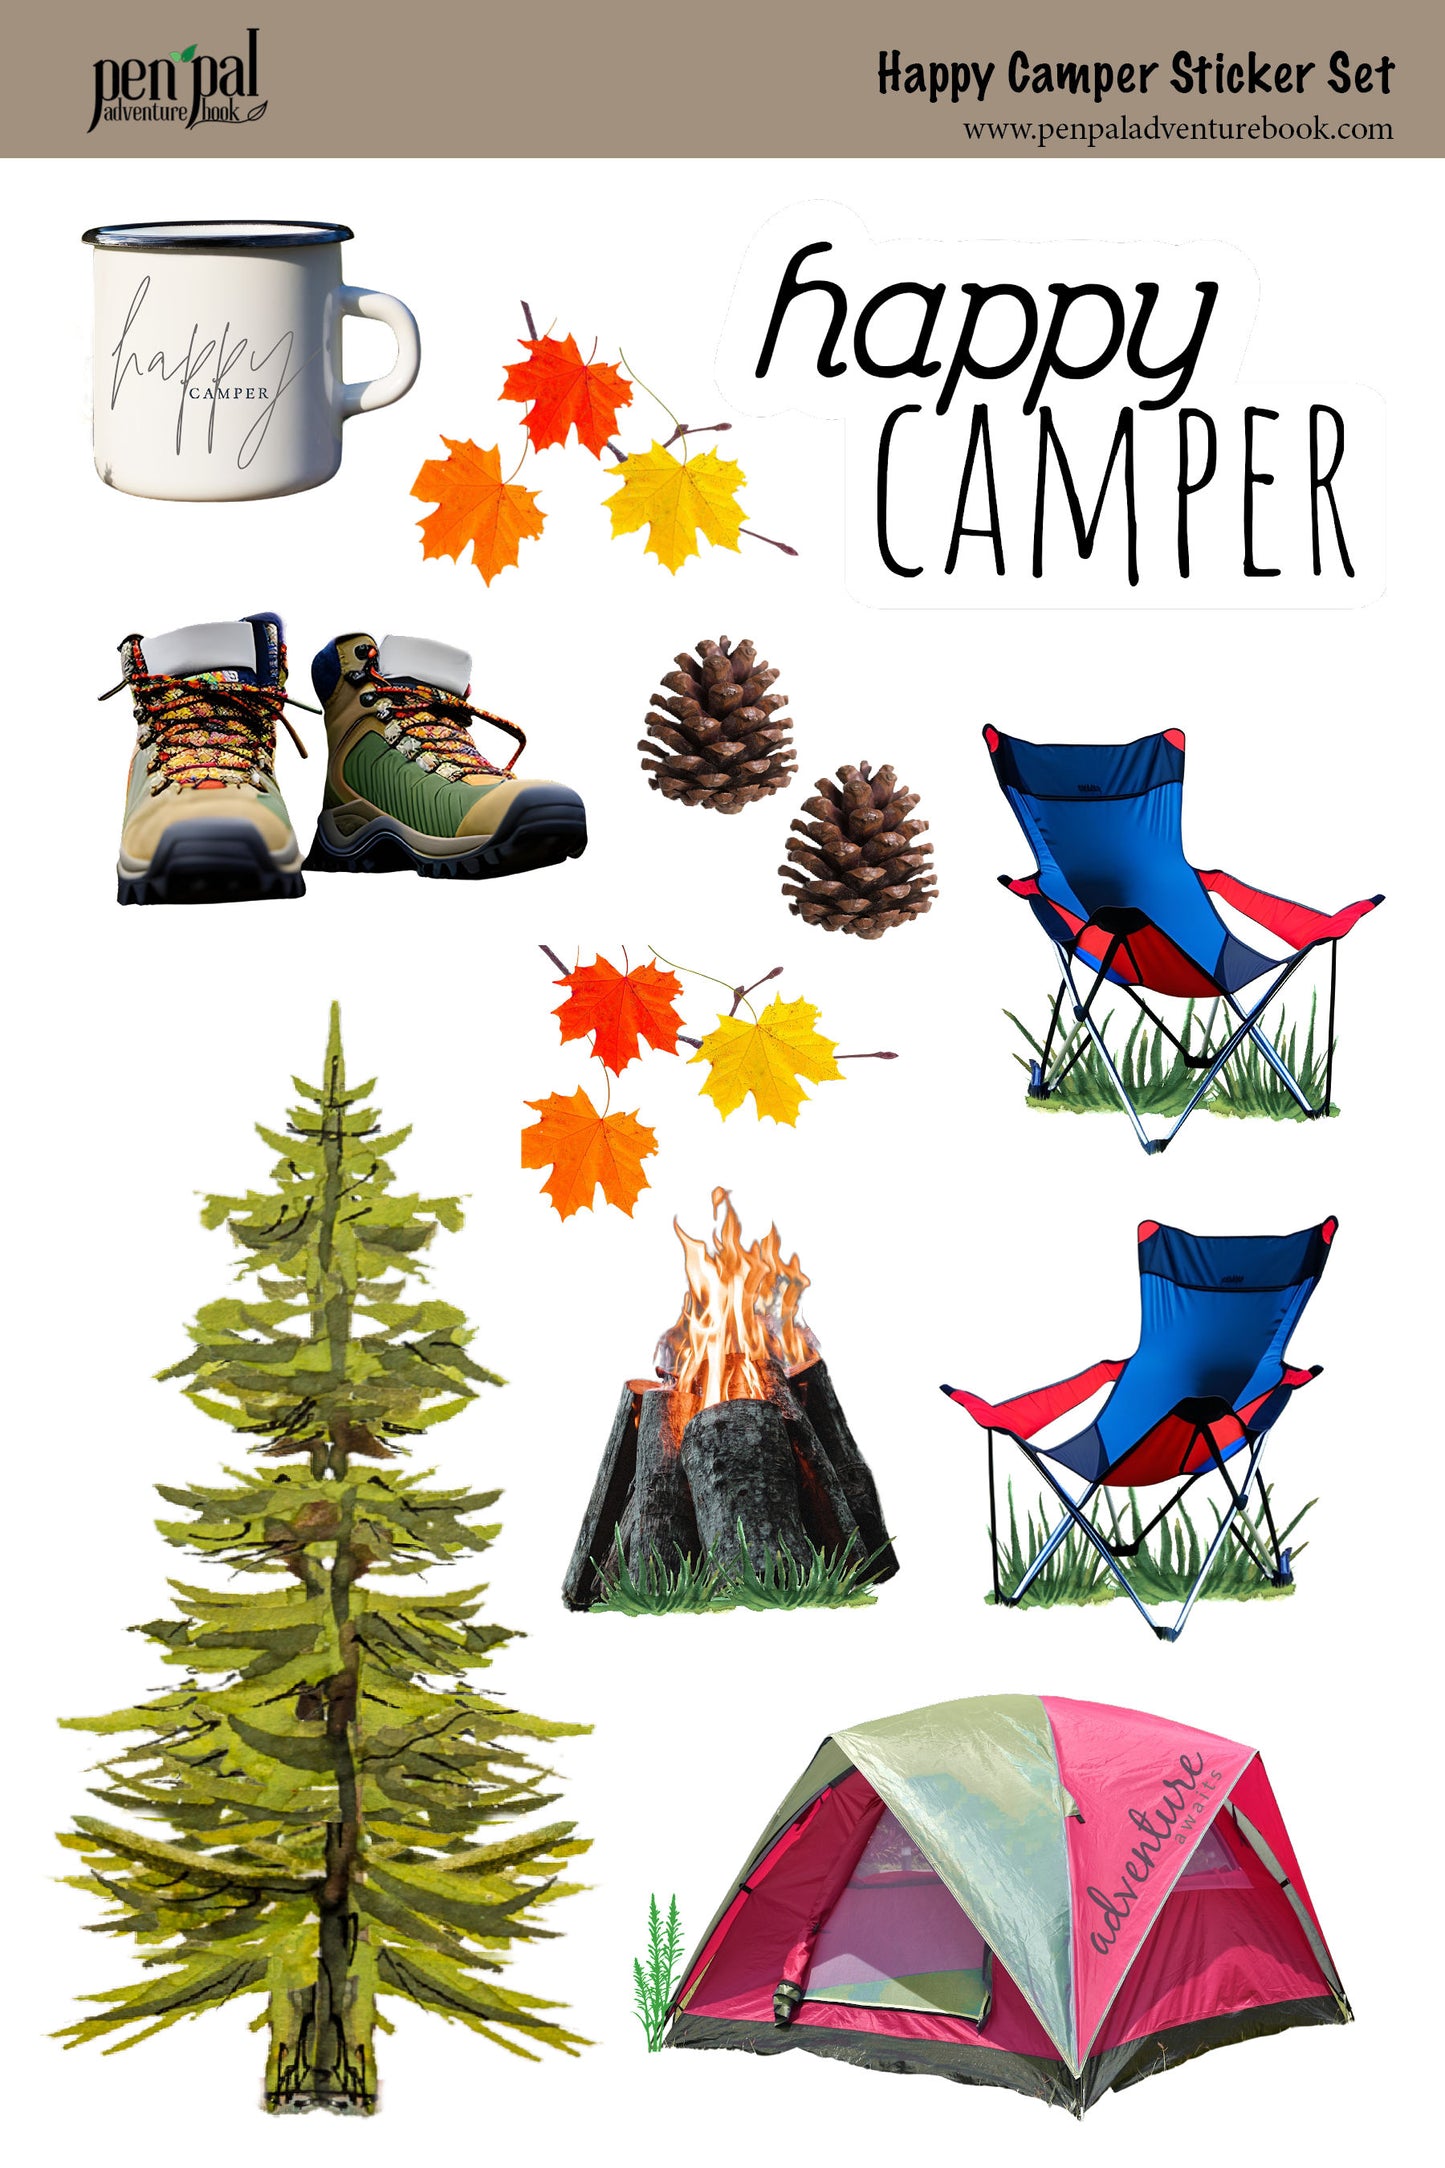 WHOLESALE-Happy Camper Sticker Set - Case of 5